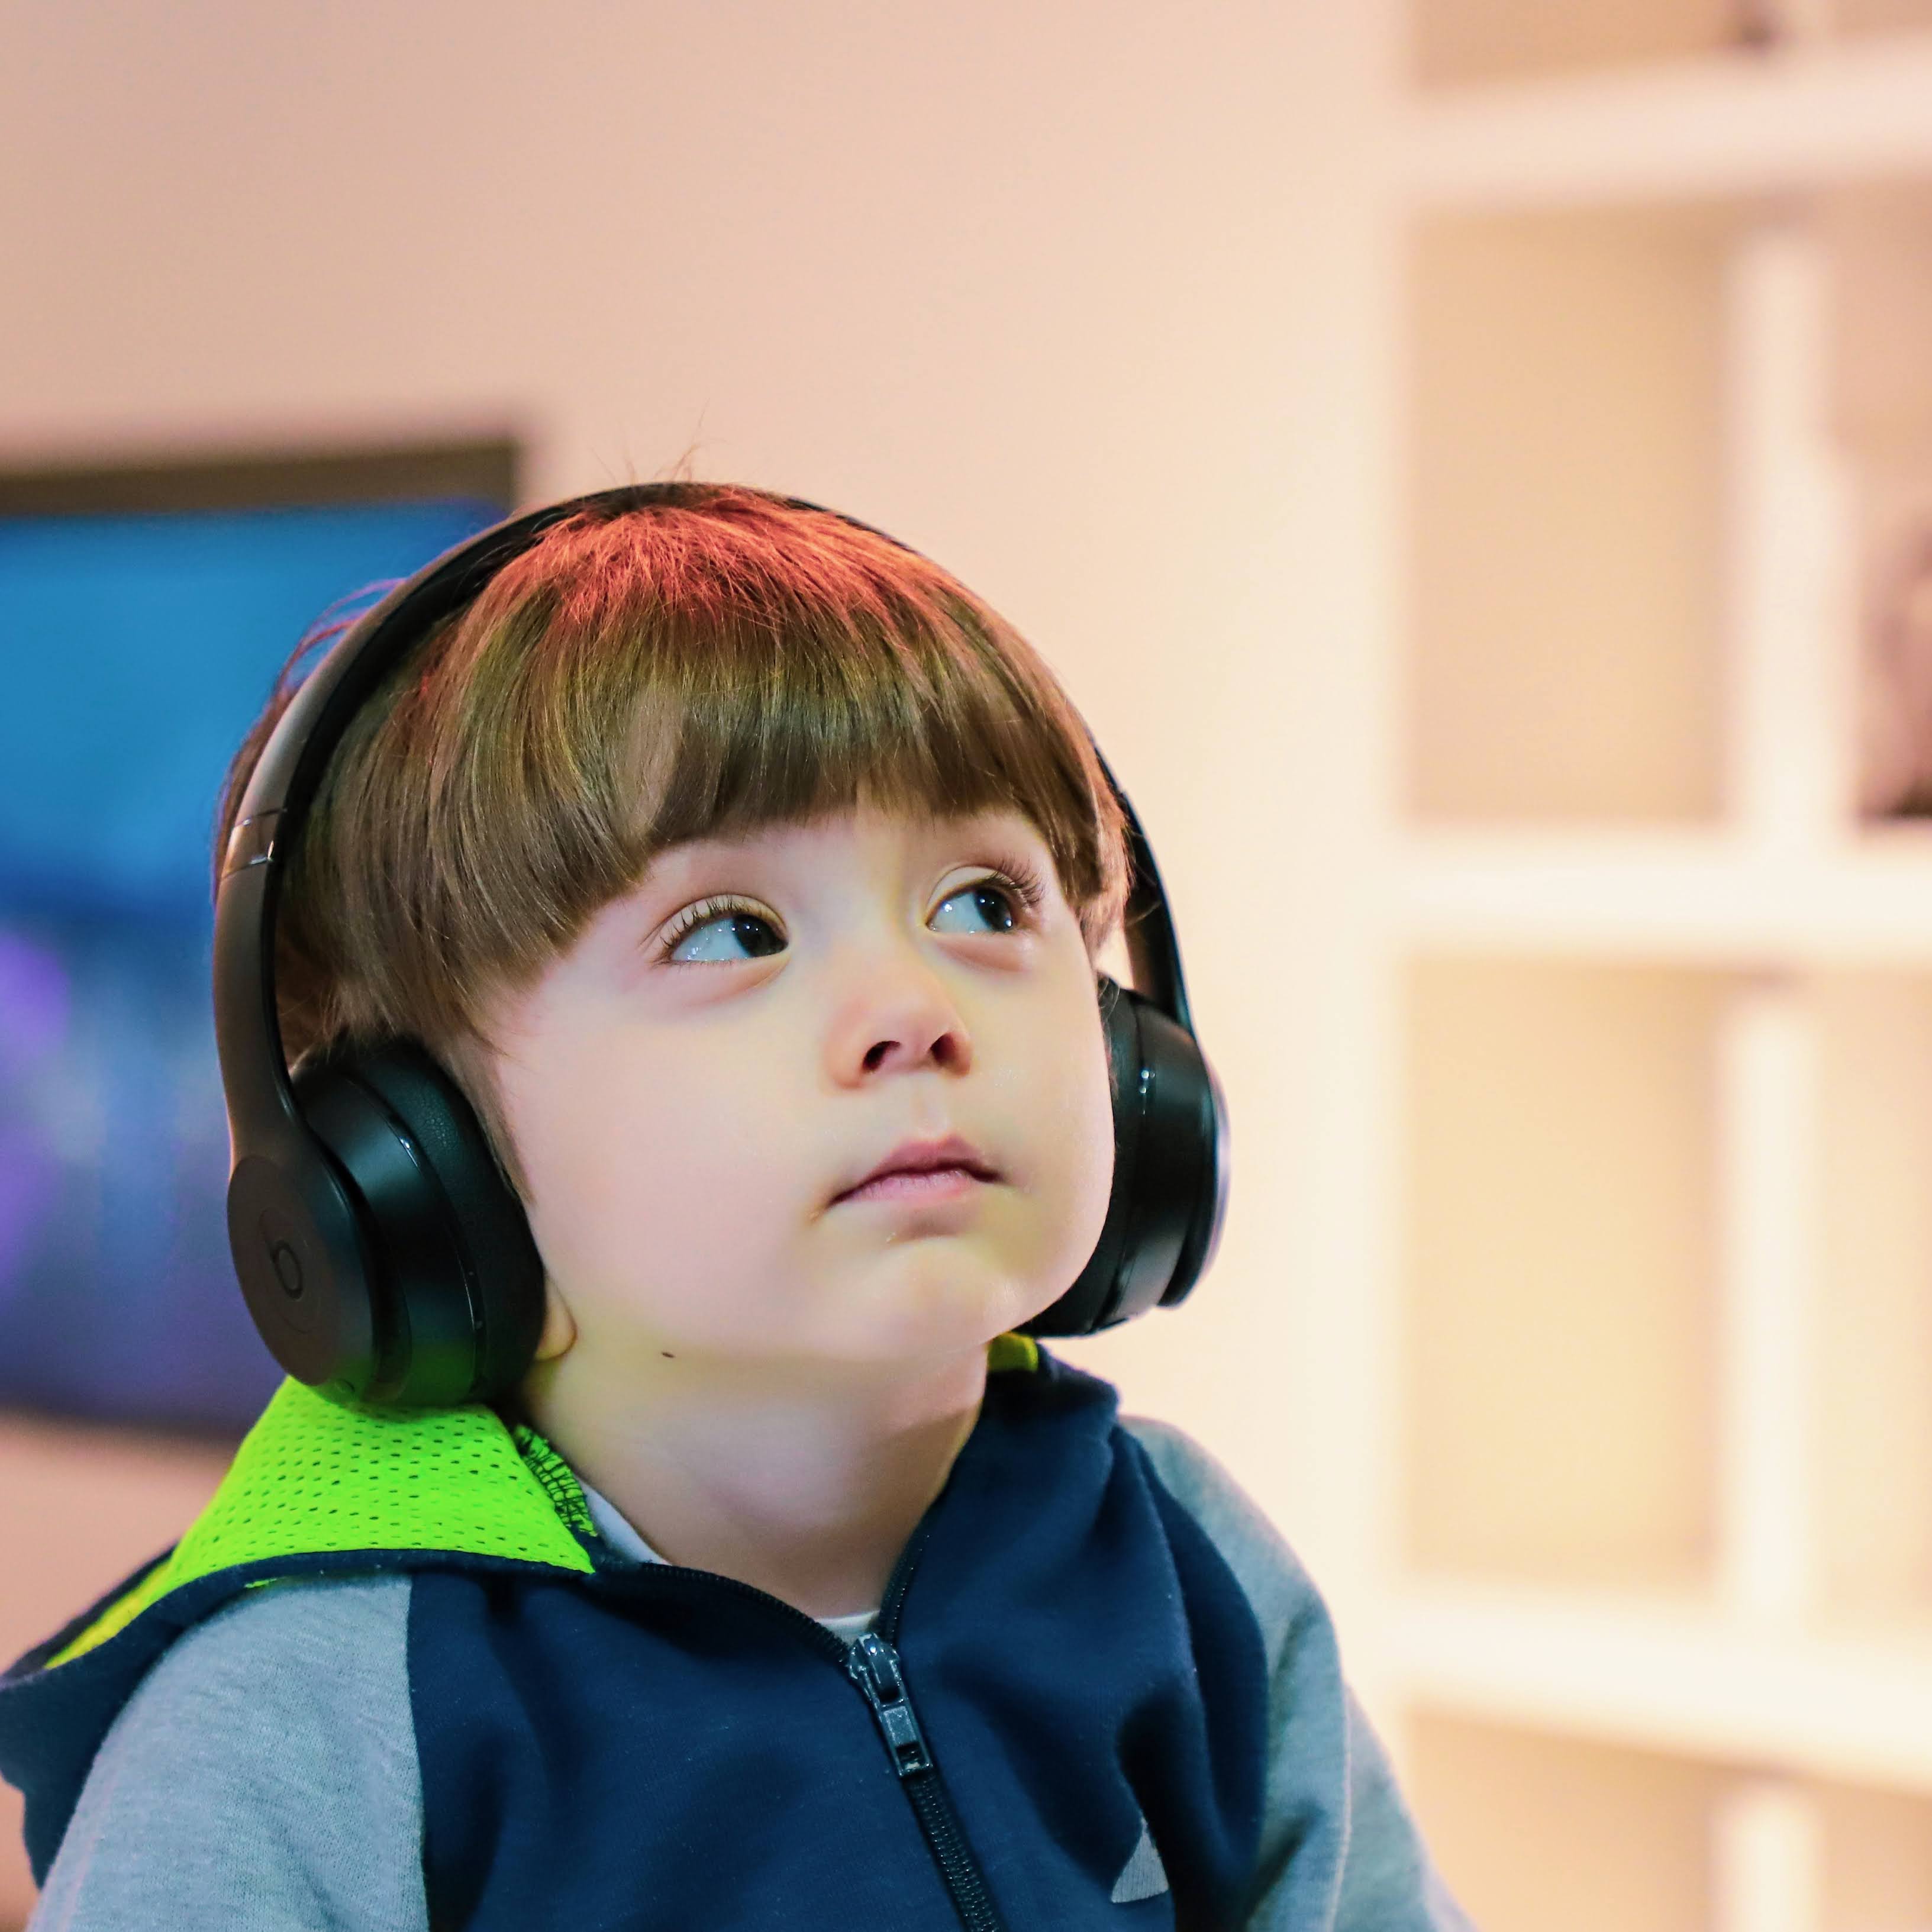 Child with Headphones listening